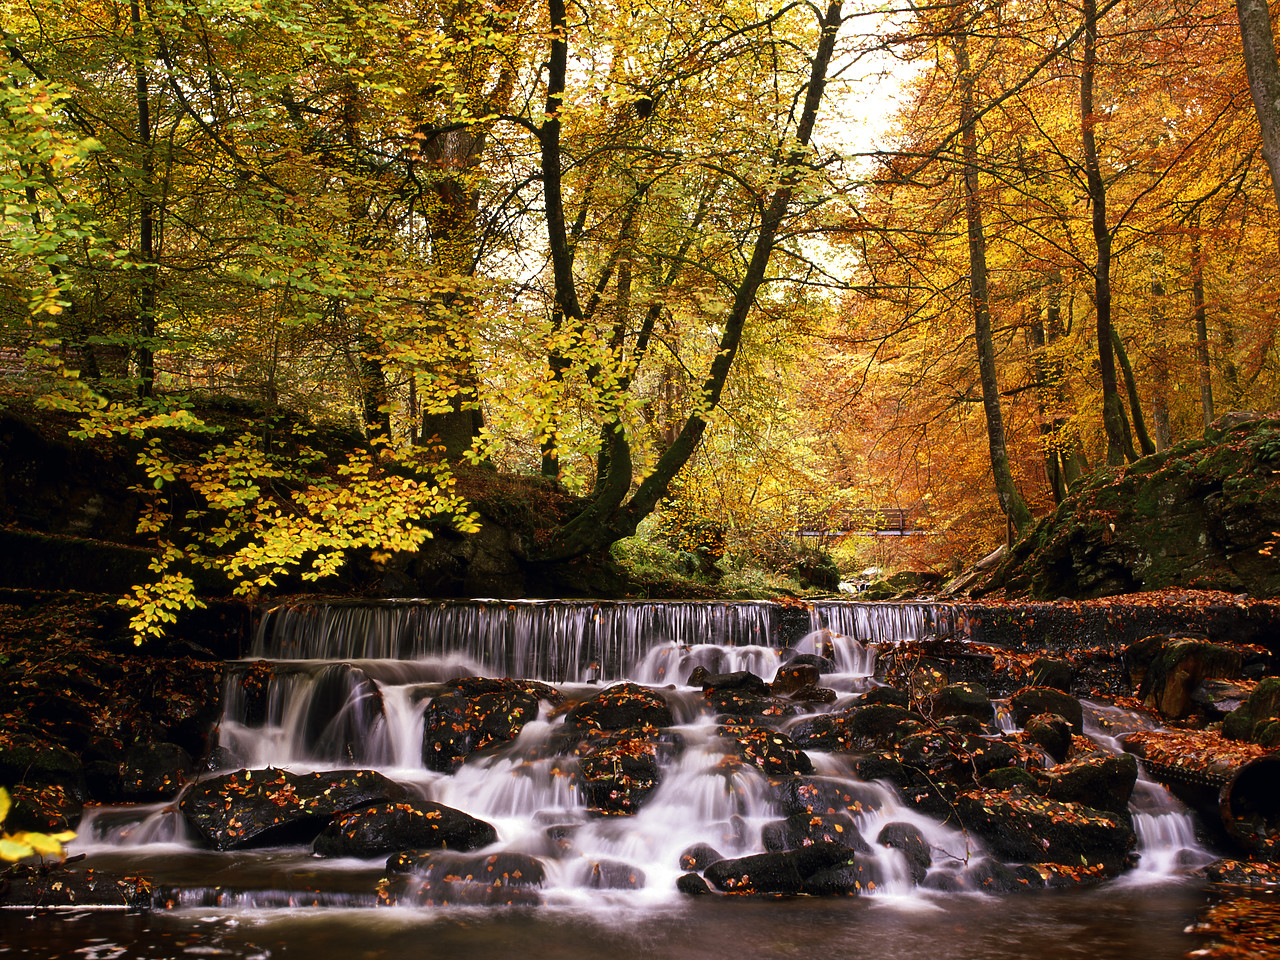 #970492-2 - The Birks in Autumn, Aberfeldy, Tayside Region, Scotland